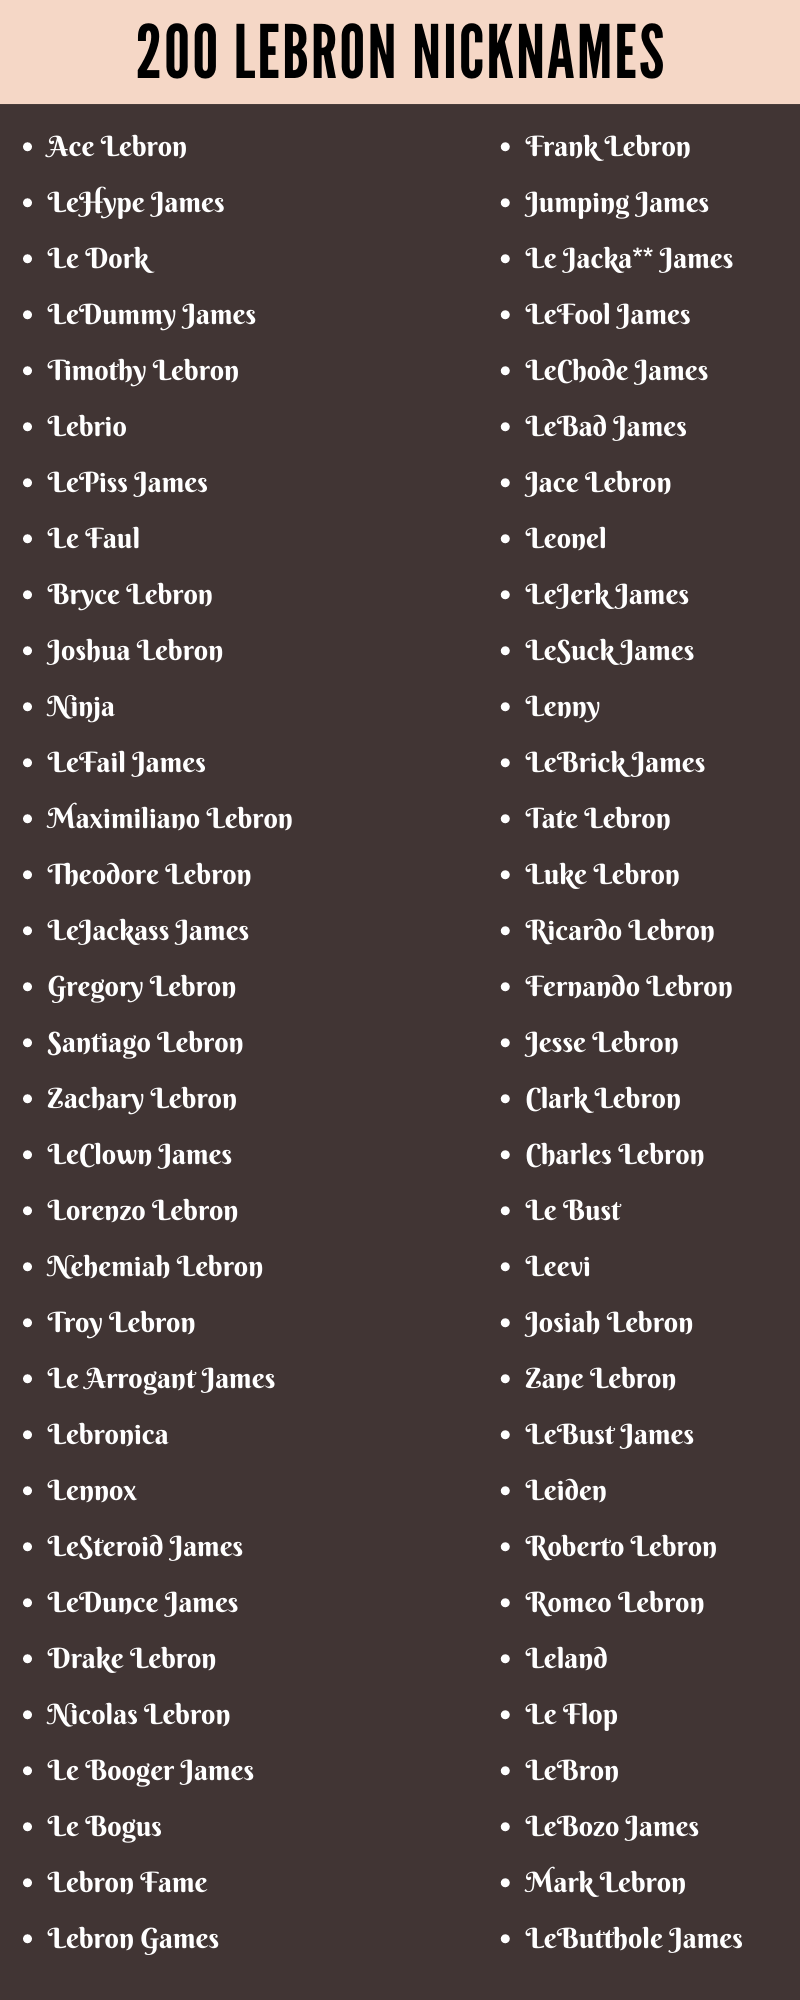 LeBron nicknames